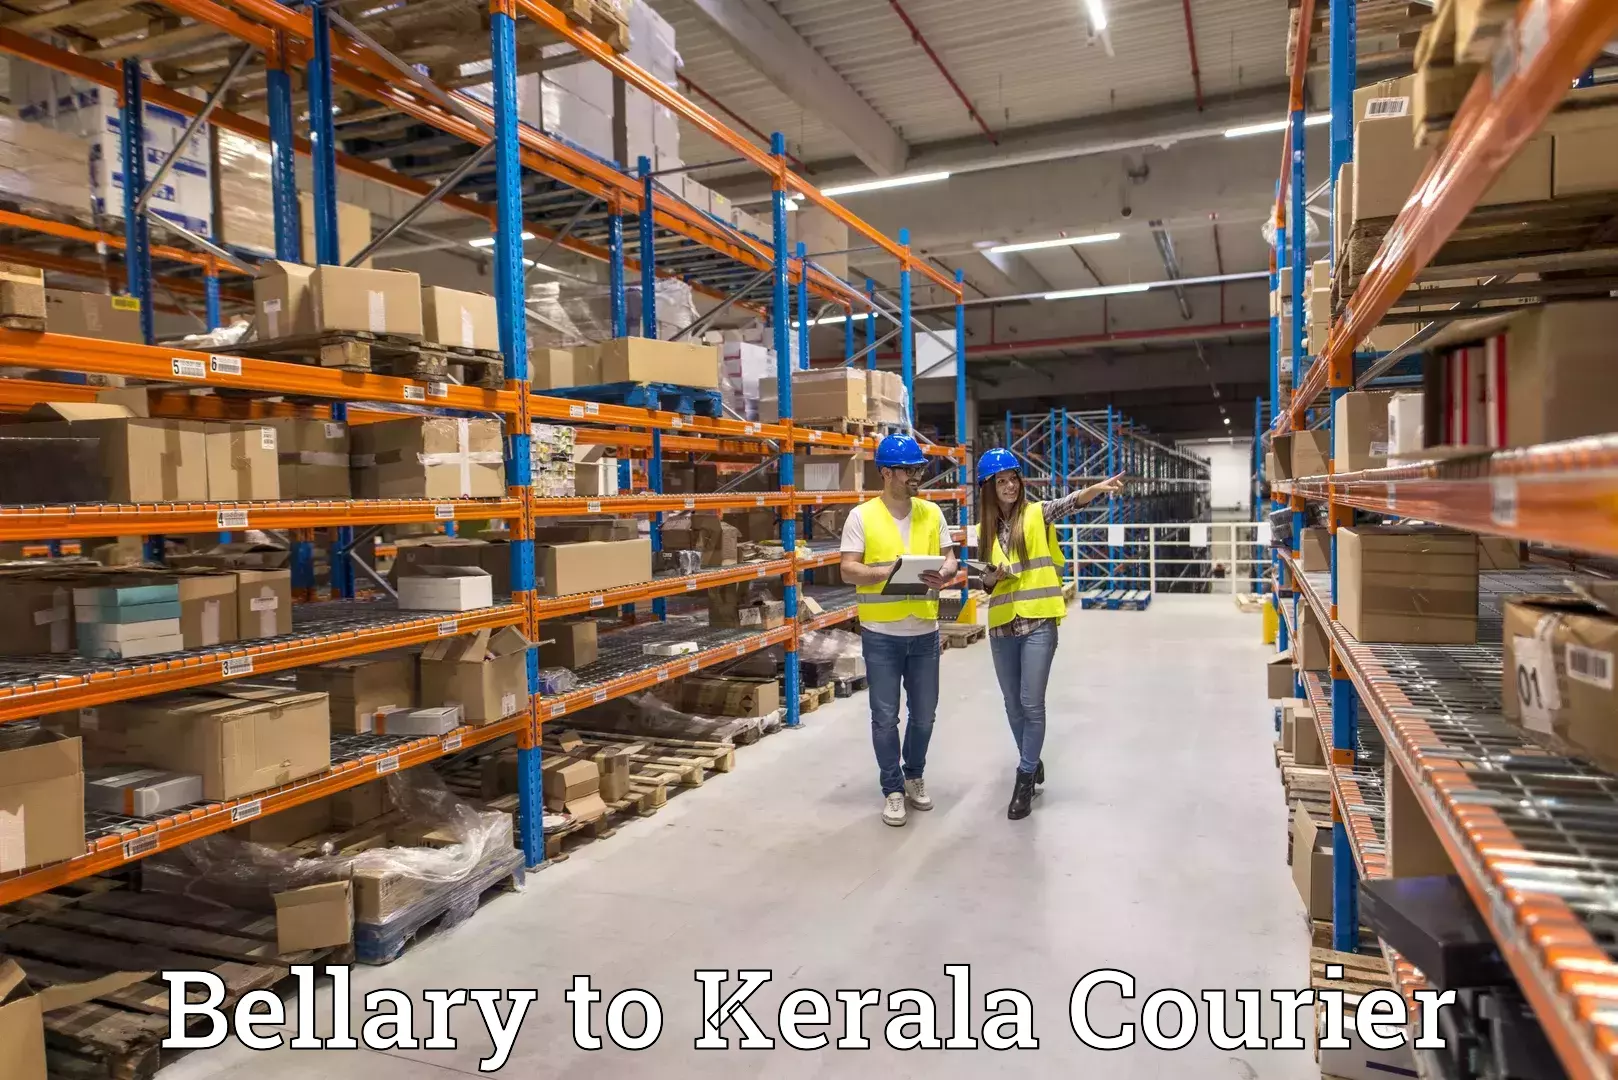 Digital courier platforms Bellary to Kerala